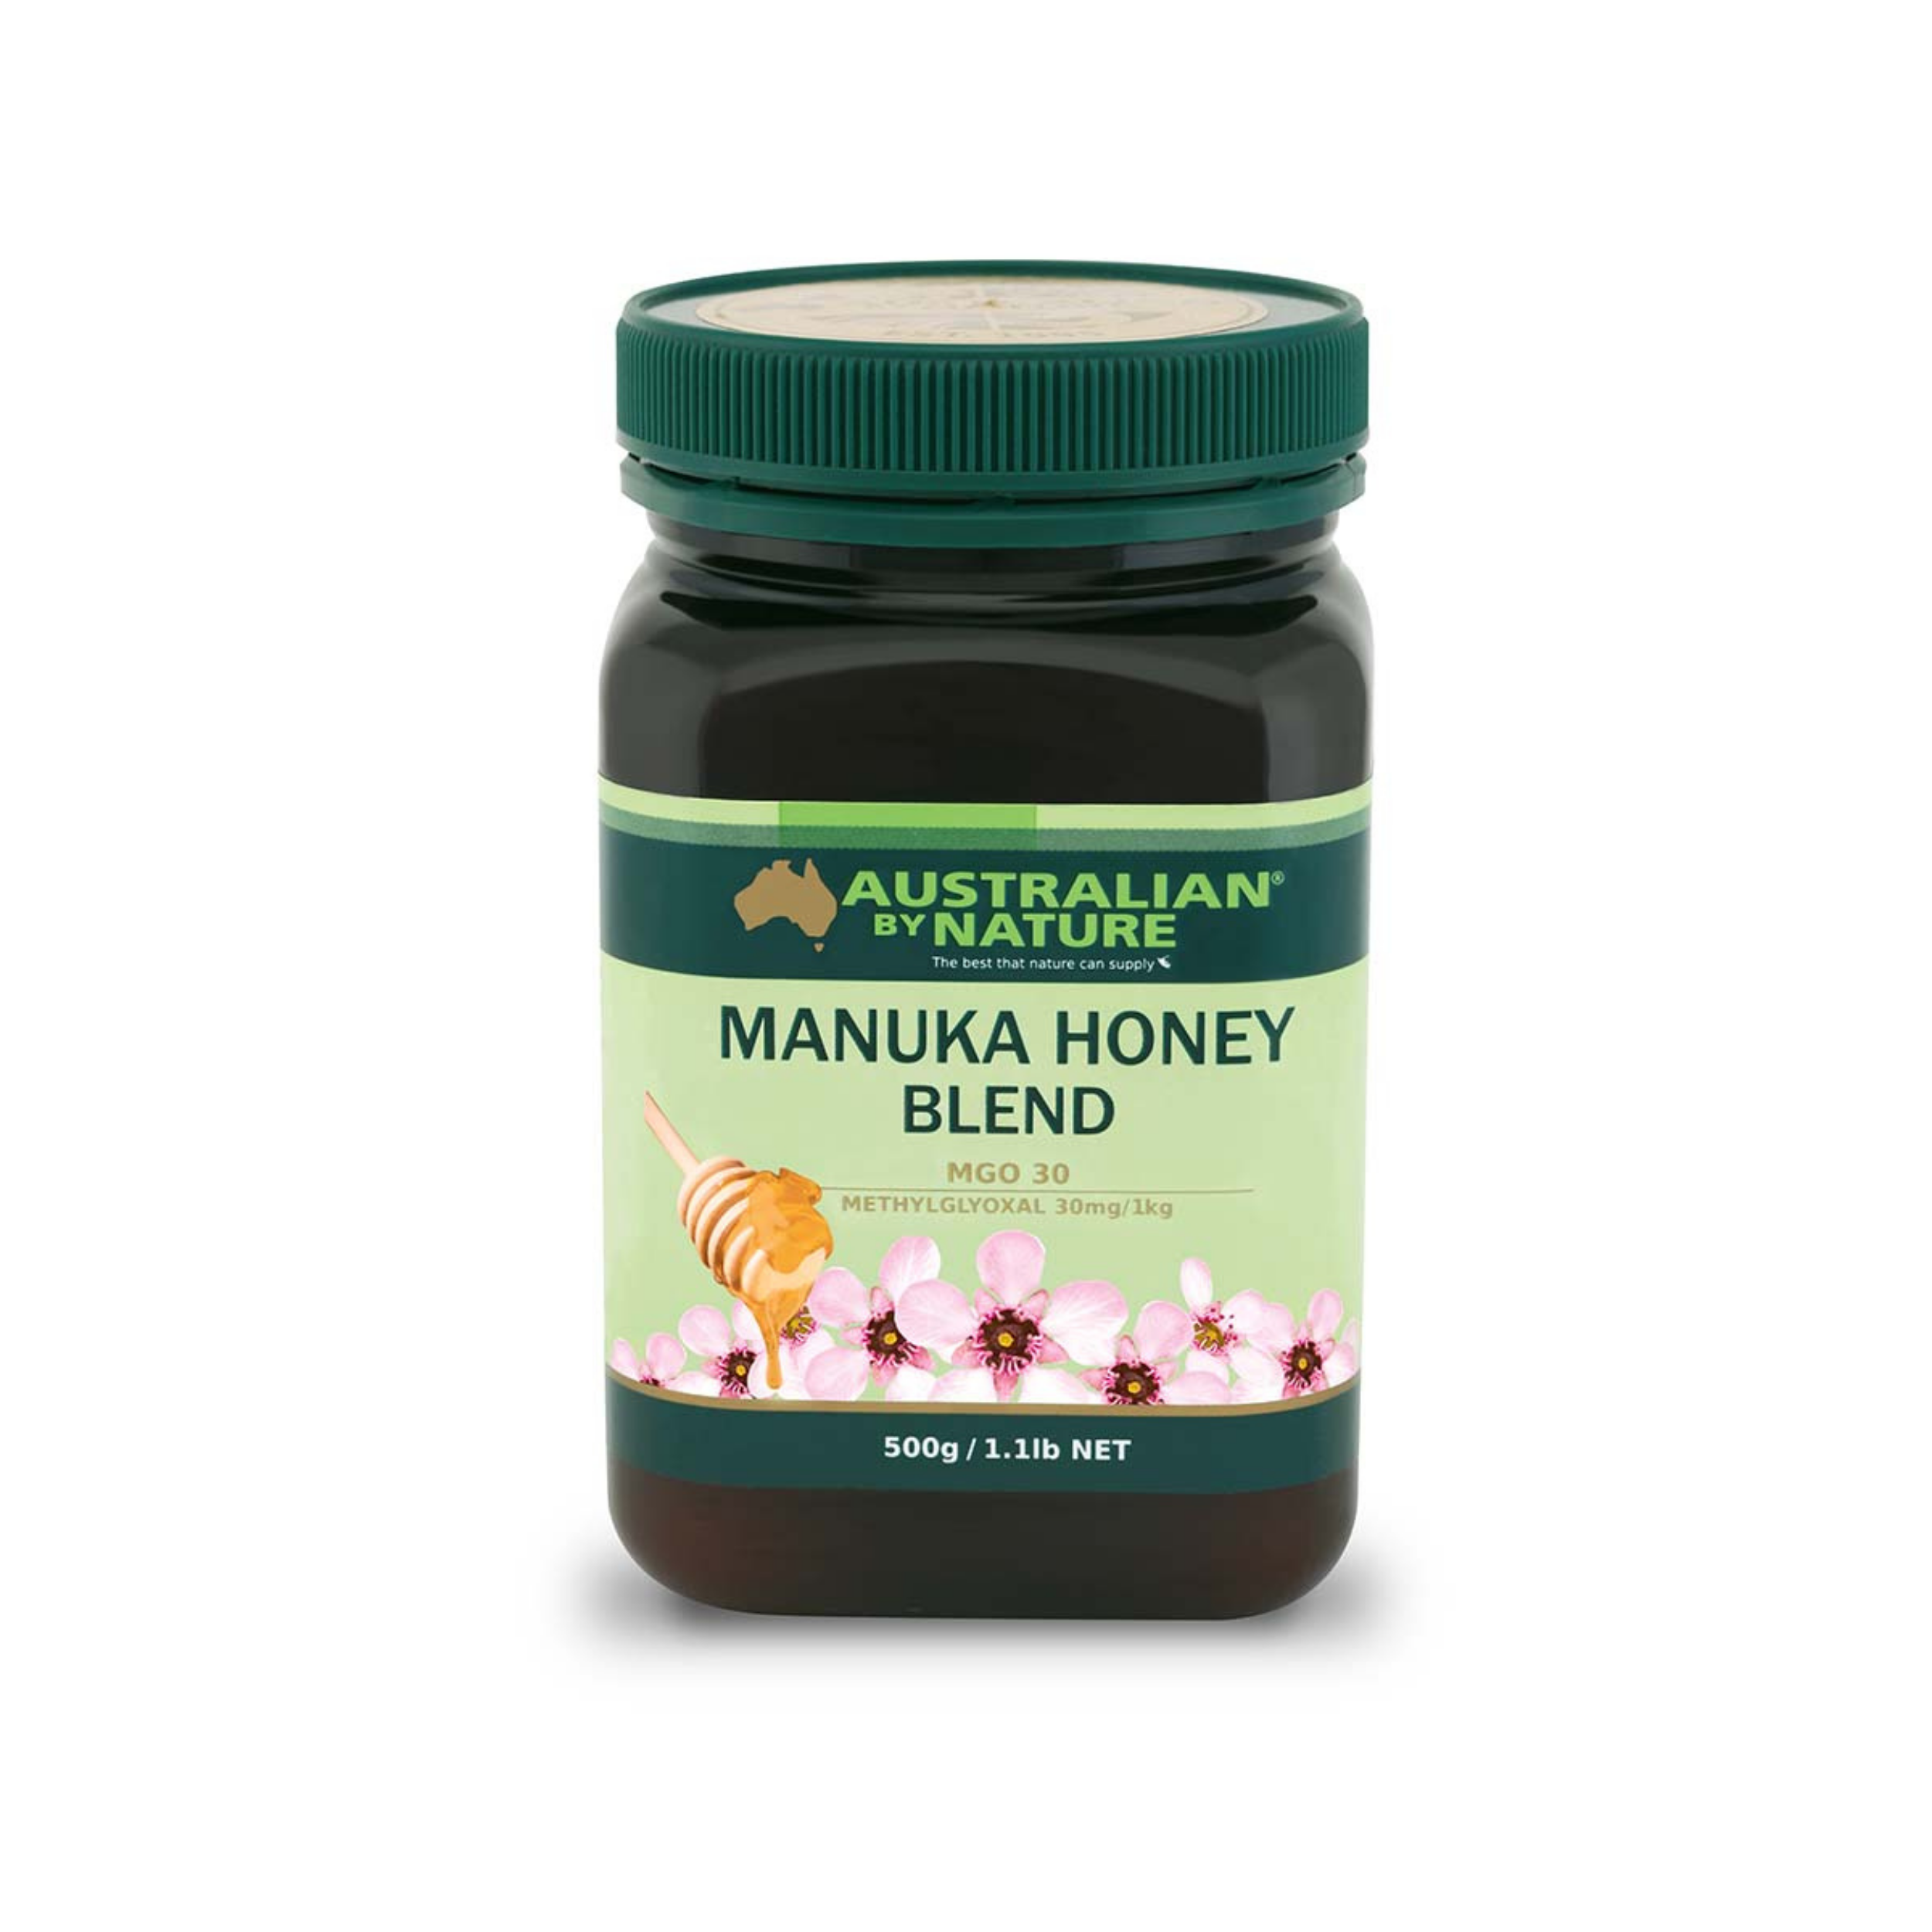 Australian By Nature Manuka Honey Blend MGO 30 500g